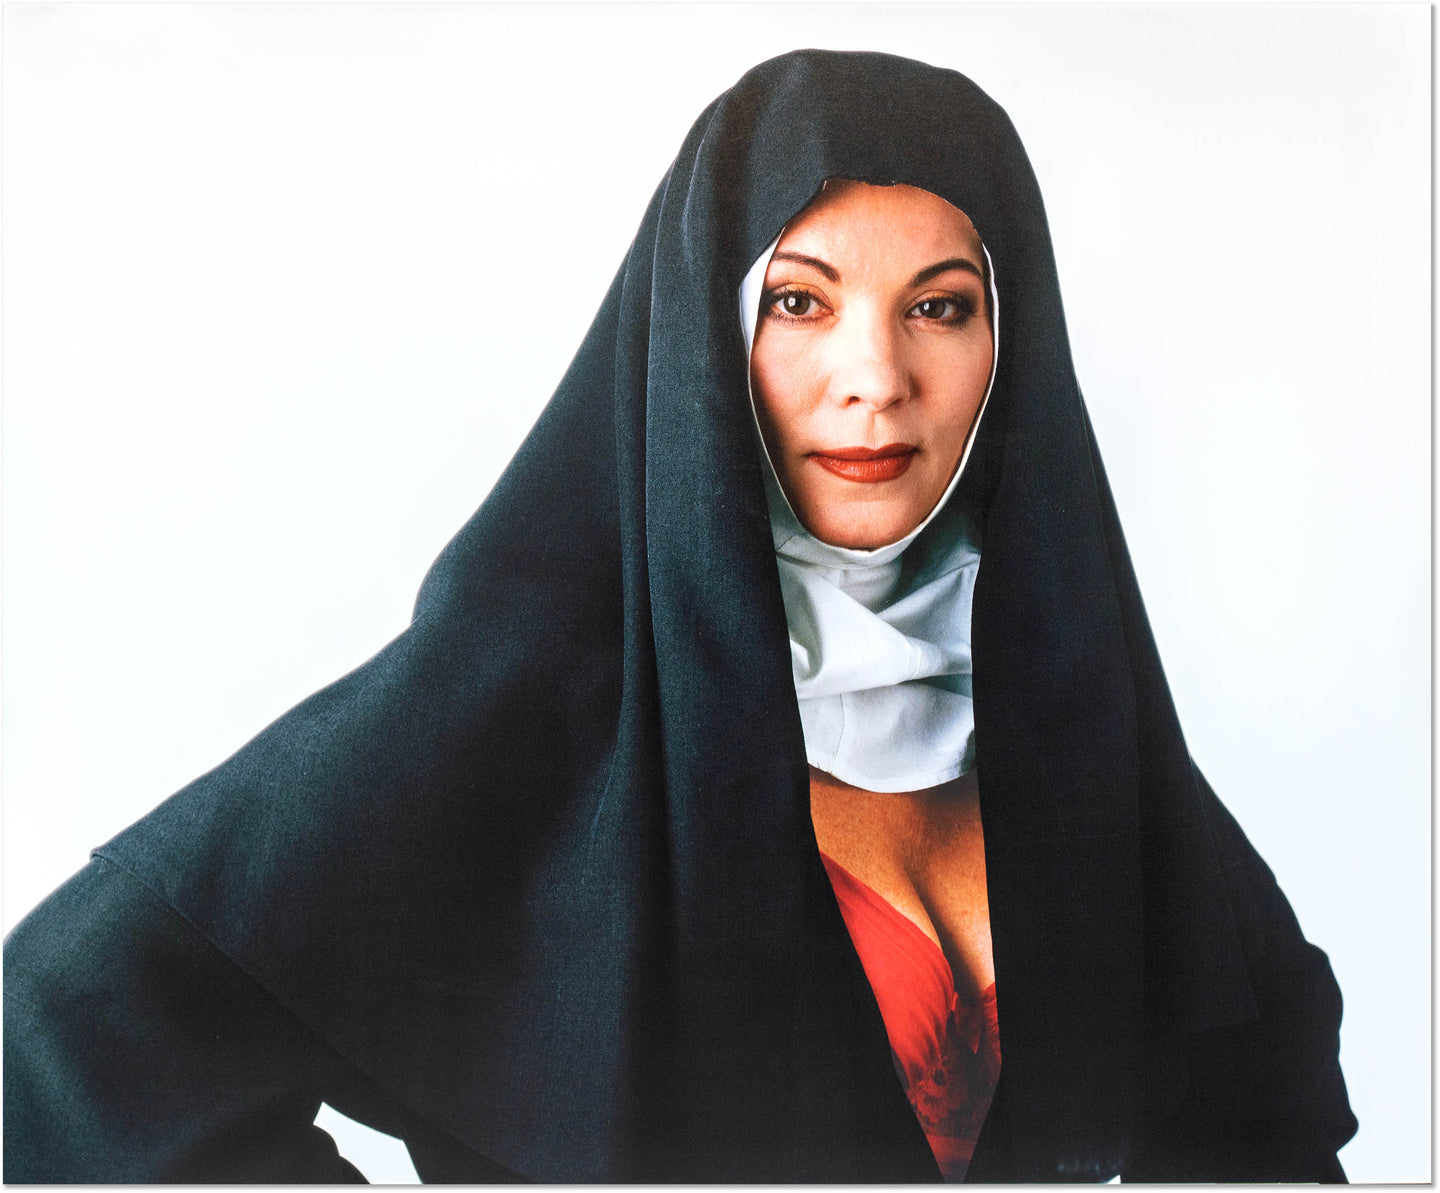 WOWE, Iris Berber, actress, Berlin, 1996